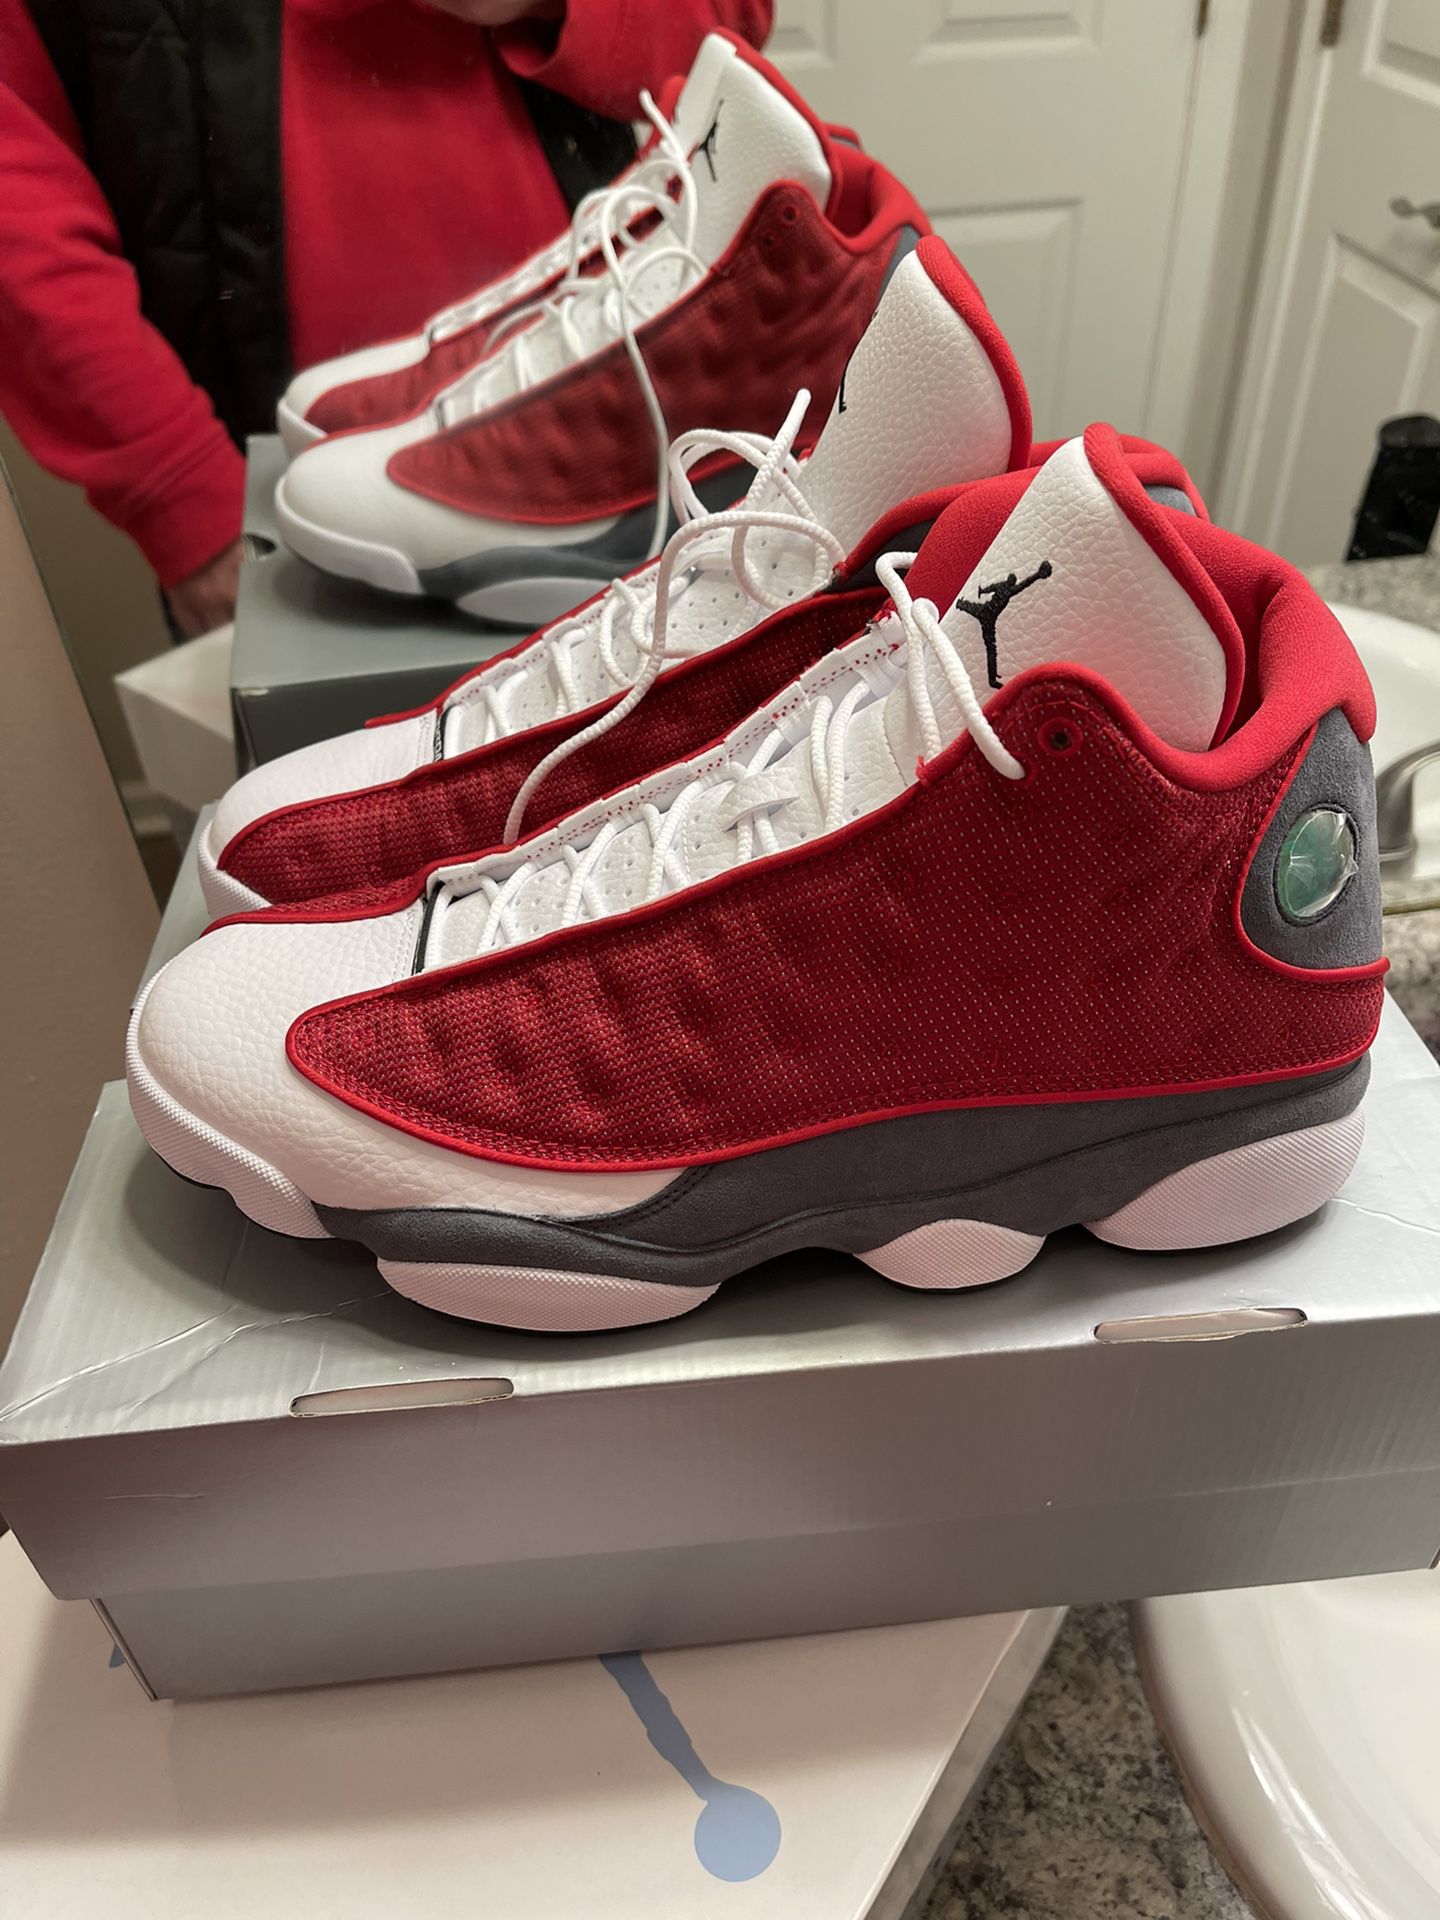 Jordan 13 Red Flints